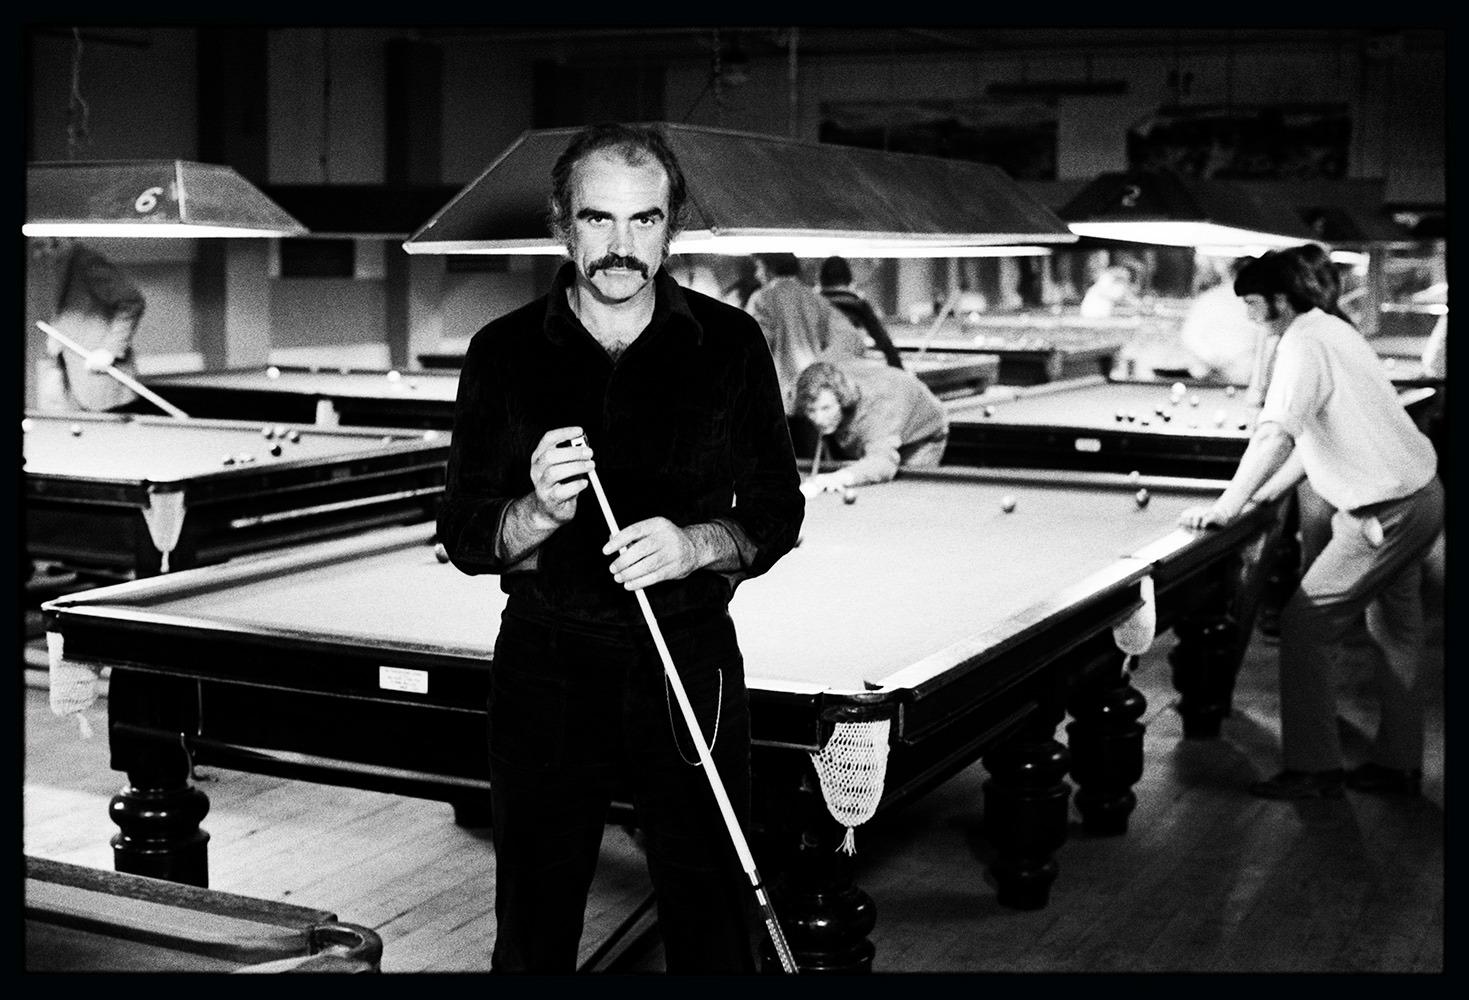 Sean Connery Snooker - County Wicklow, Irlande, 1973 Tirage en série limitée 